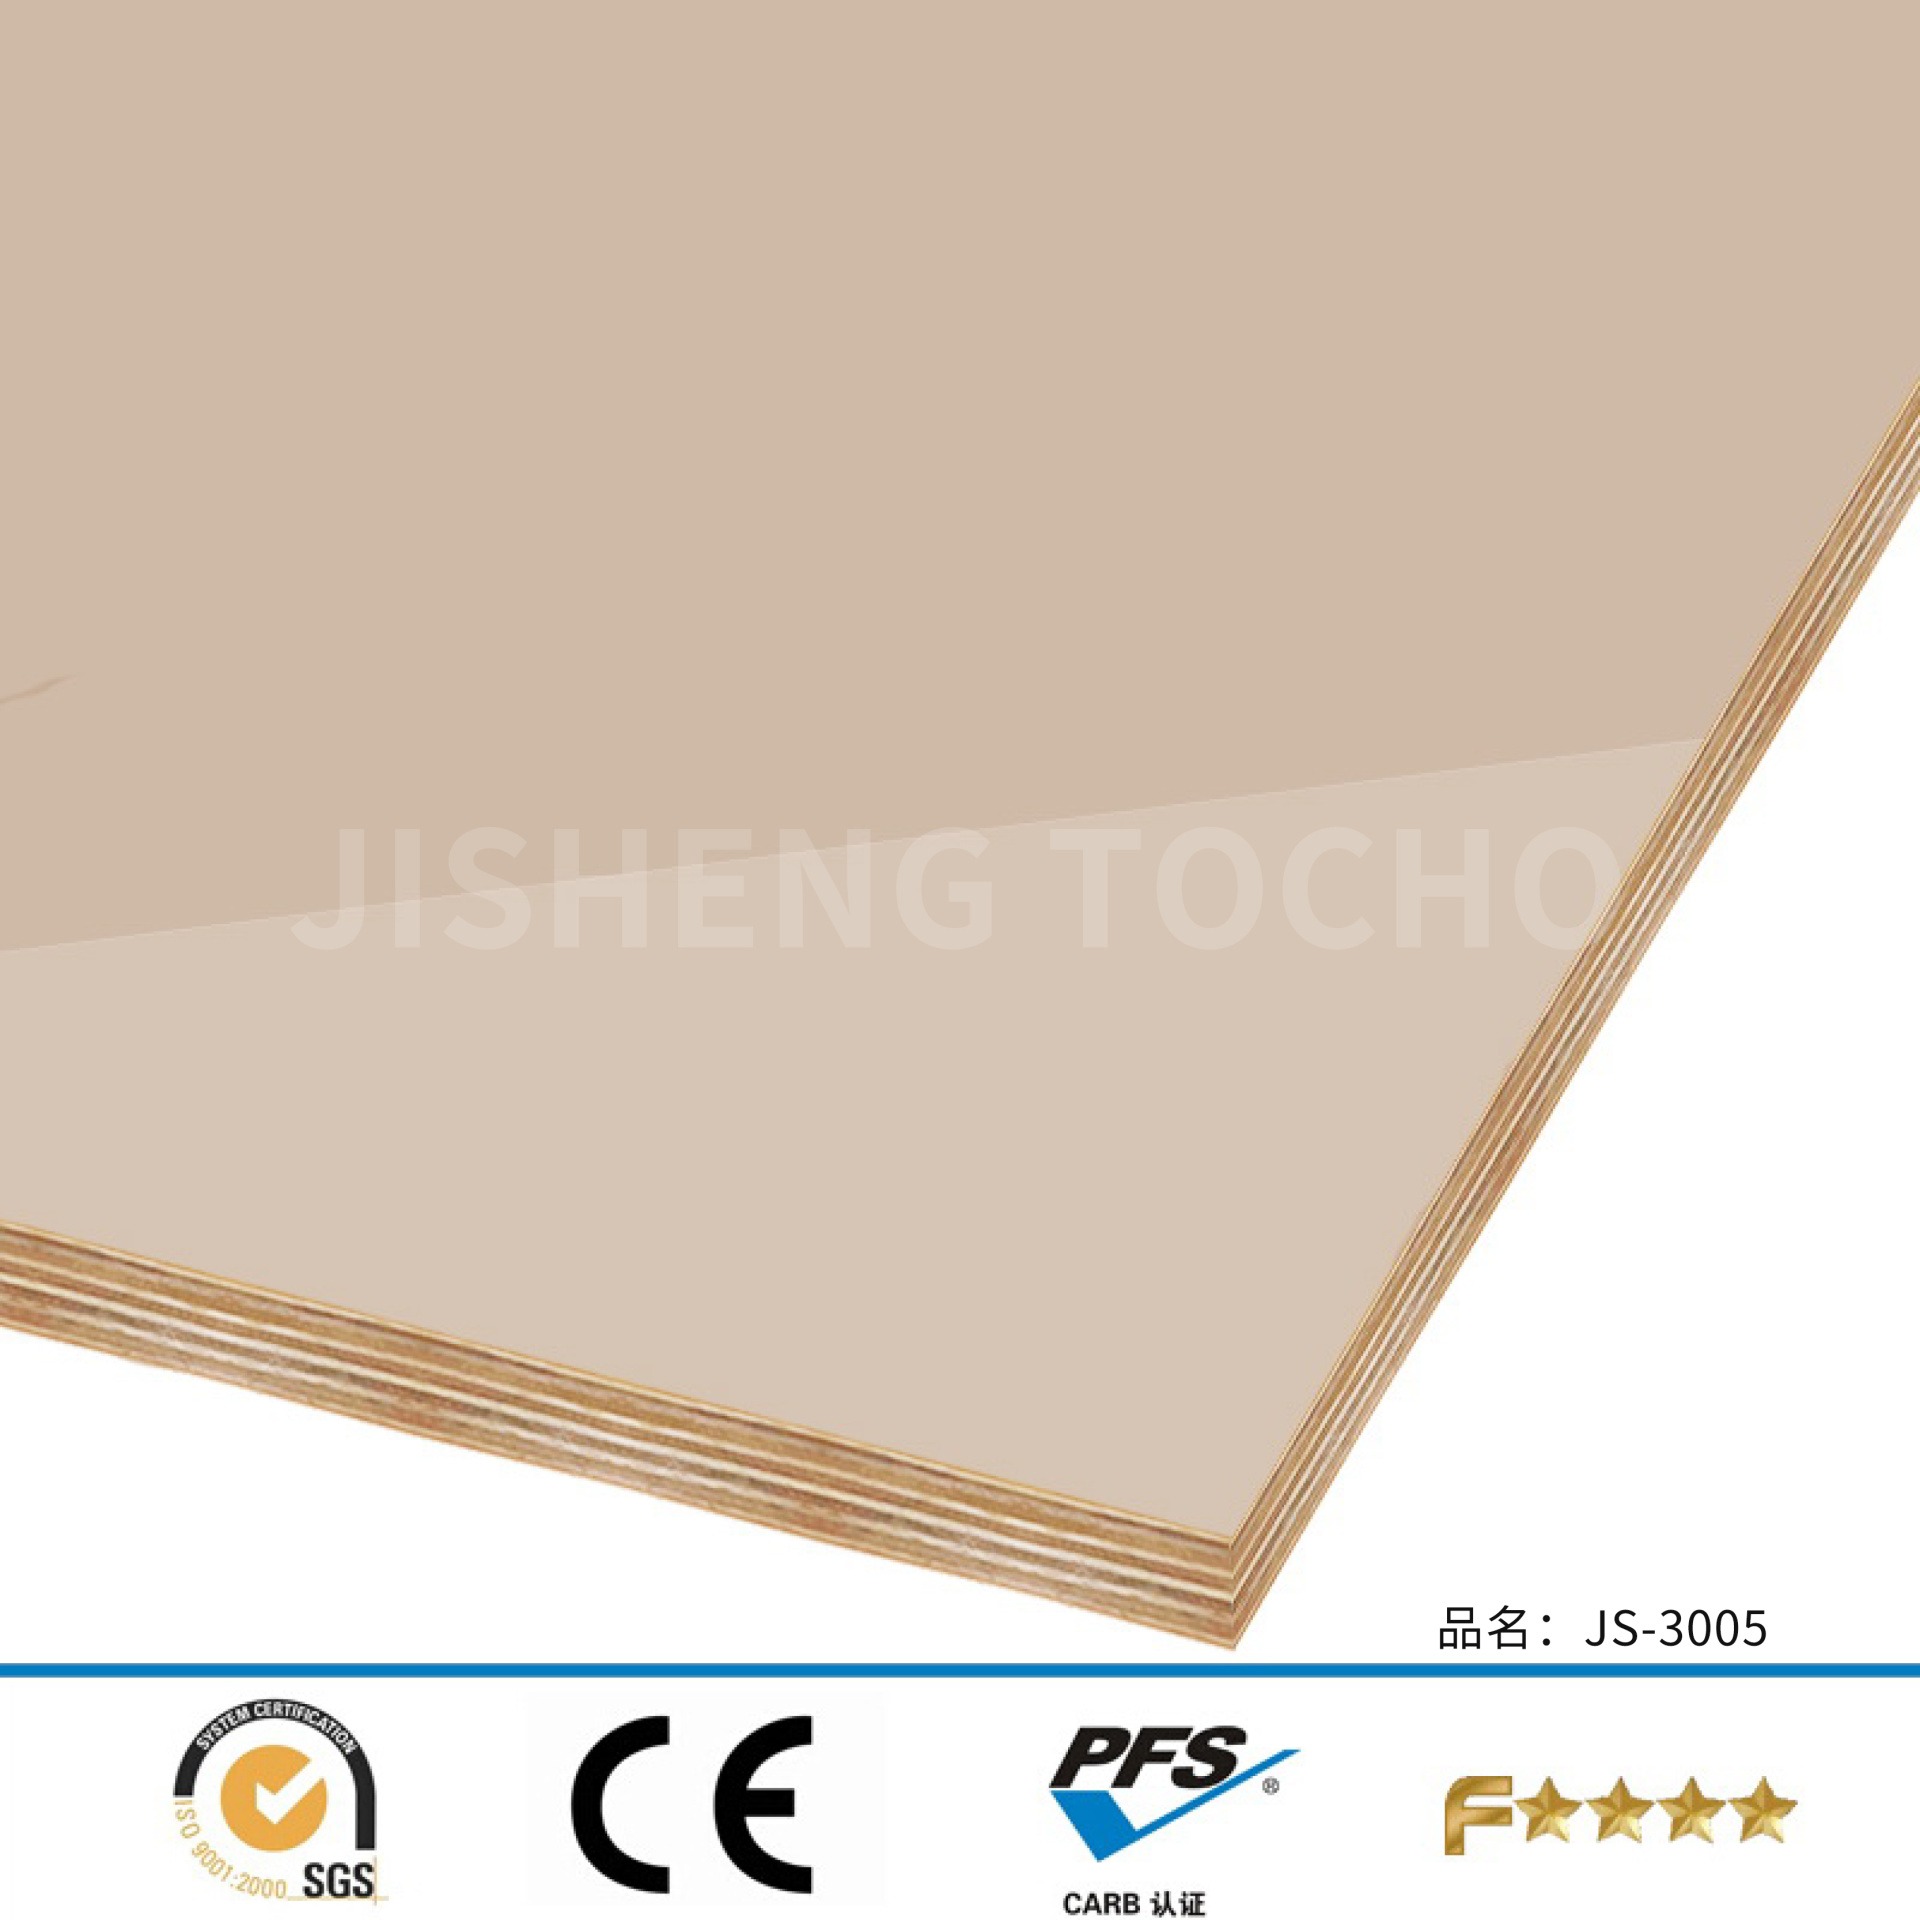 F4星环保门板 定制UV高光胶合板 滑面门板 耐污饰面板 家具装修板 源头价格材料